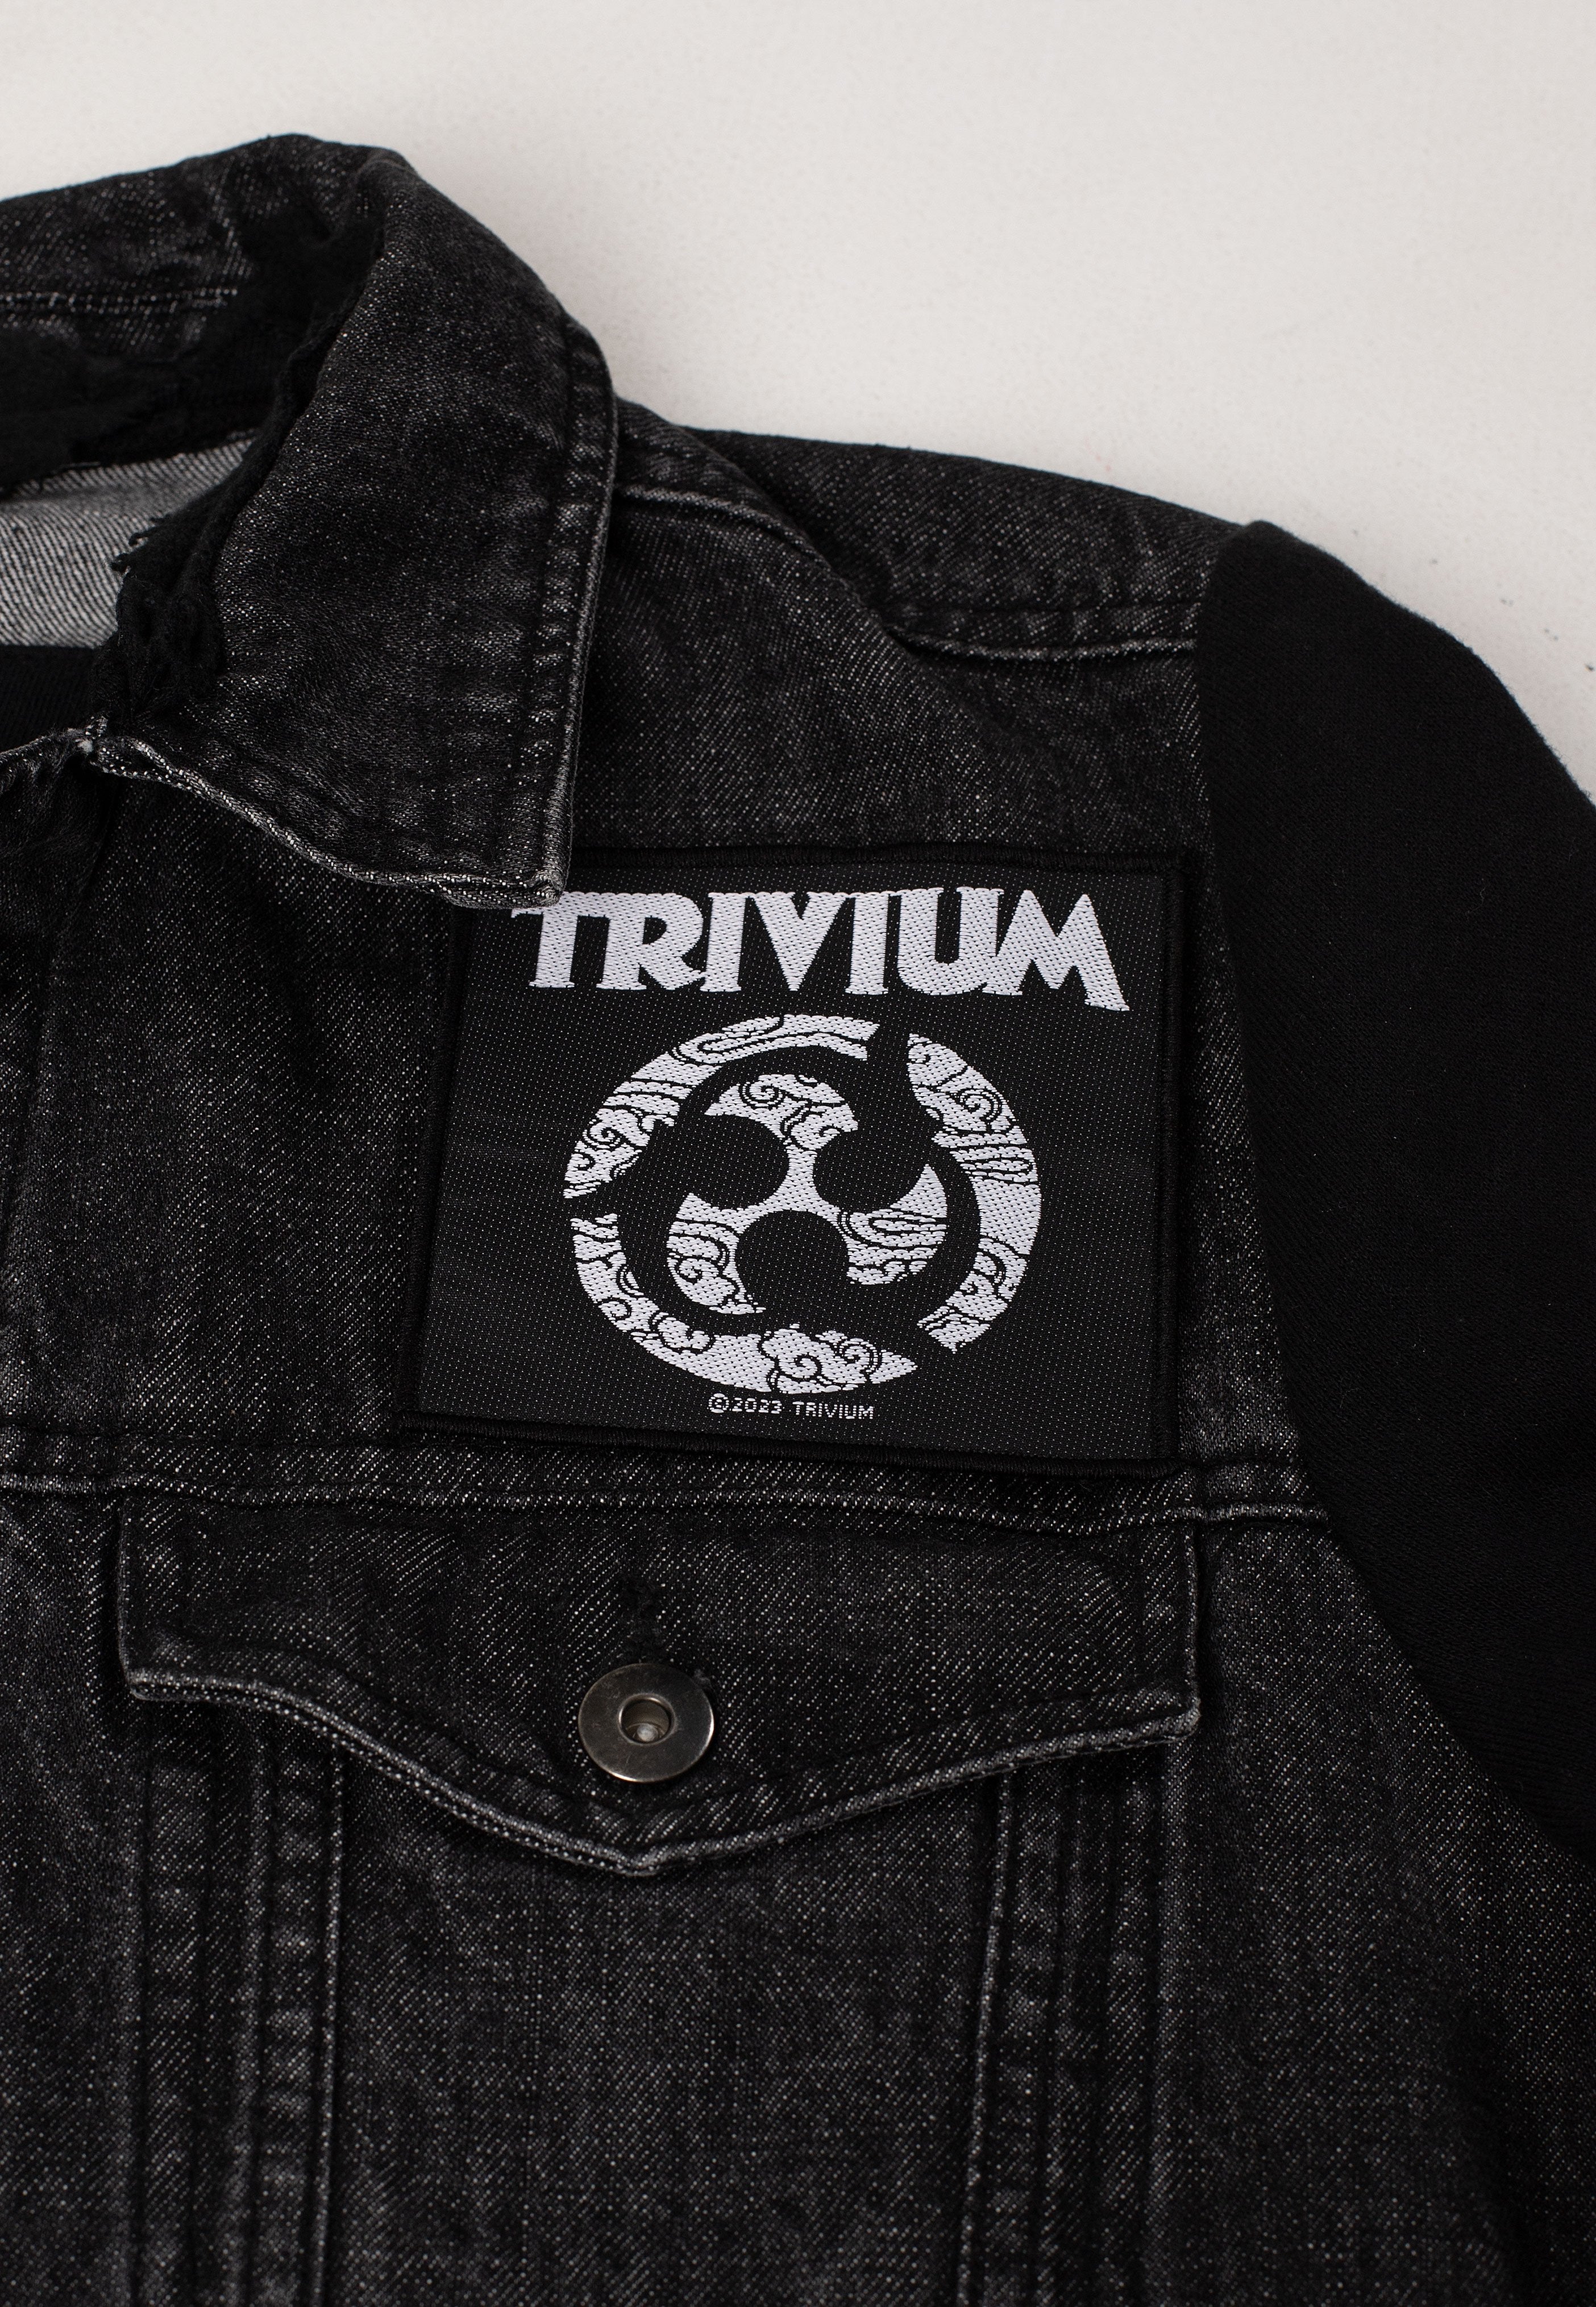 Trivium - Emblem - Patch